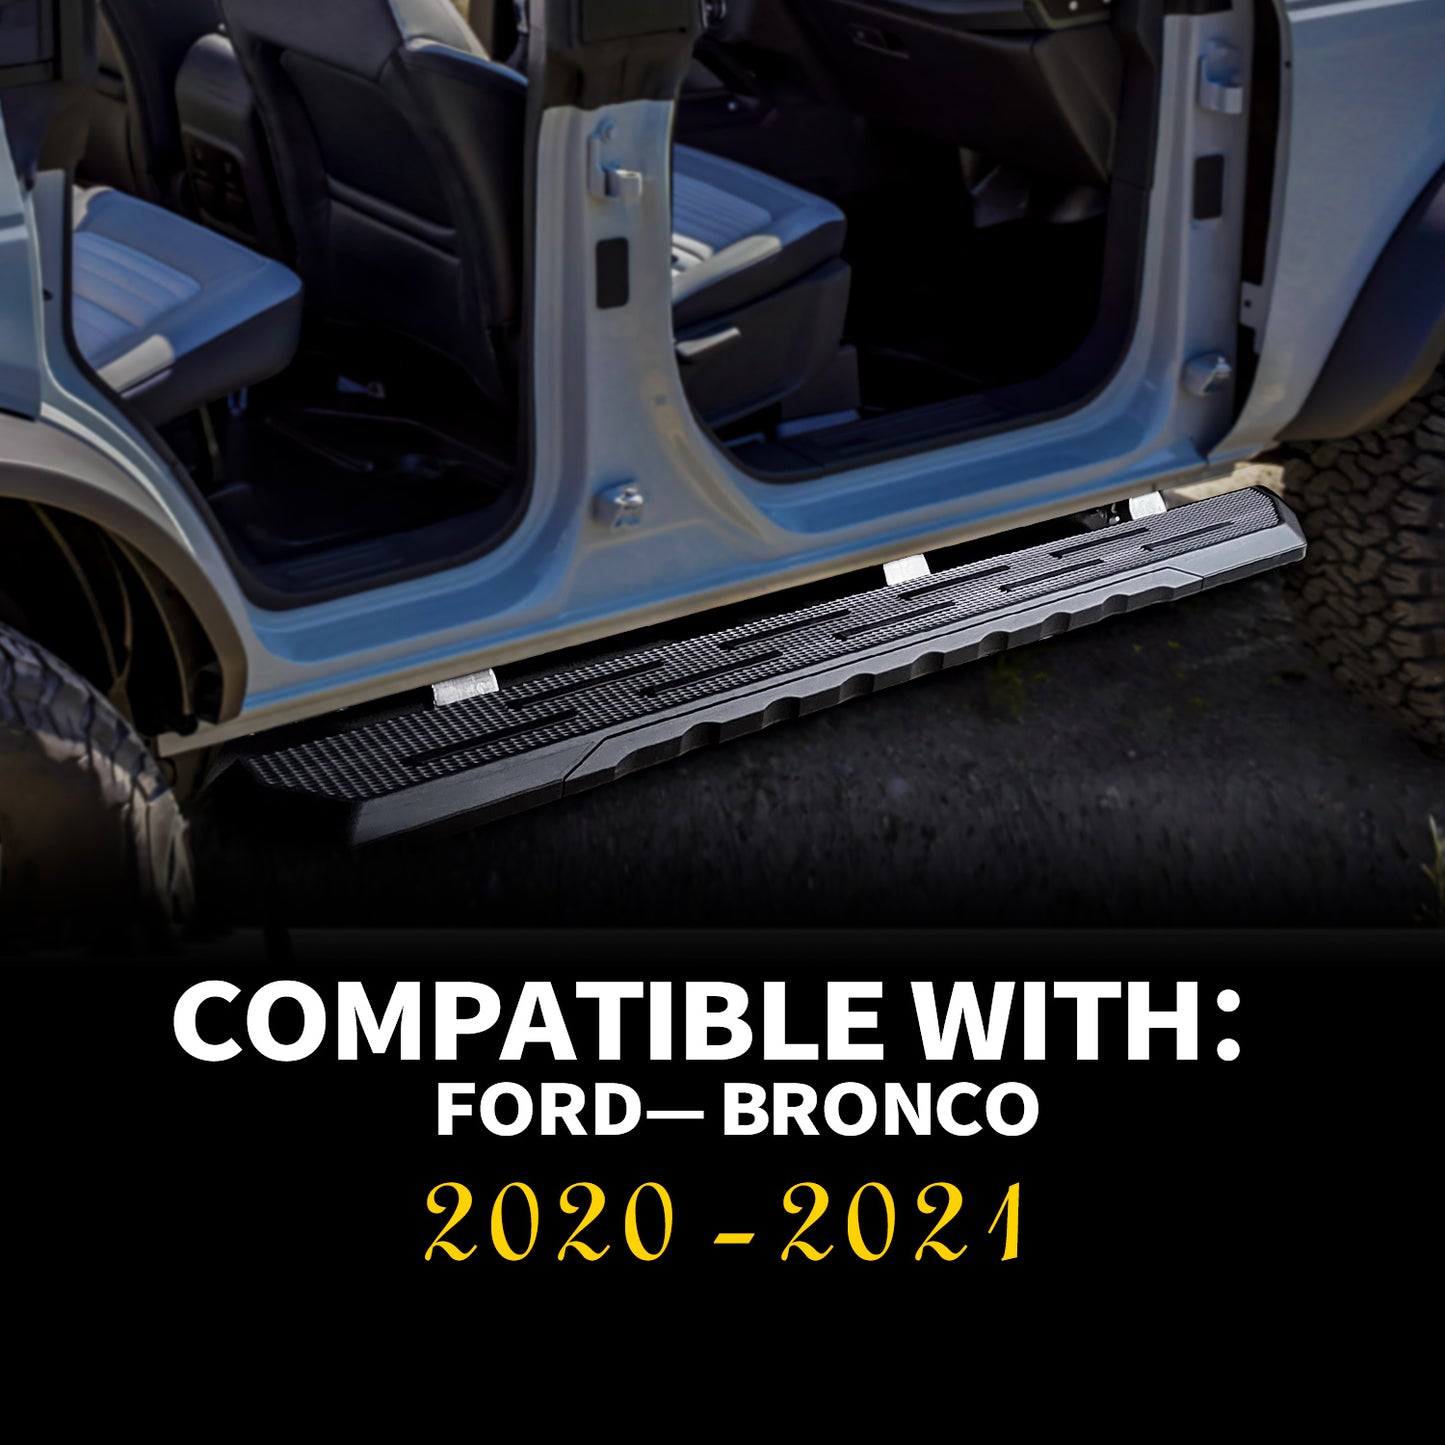 2021 2022 Ford Bronco 4 도어와 호환되는 고풍 발판